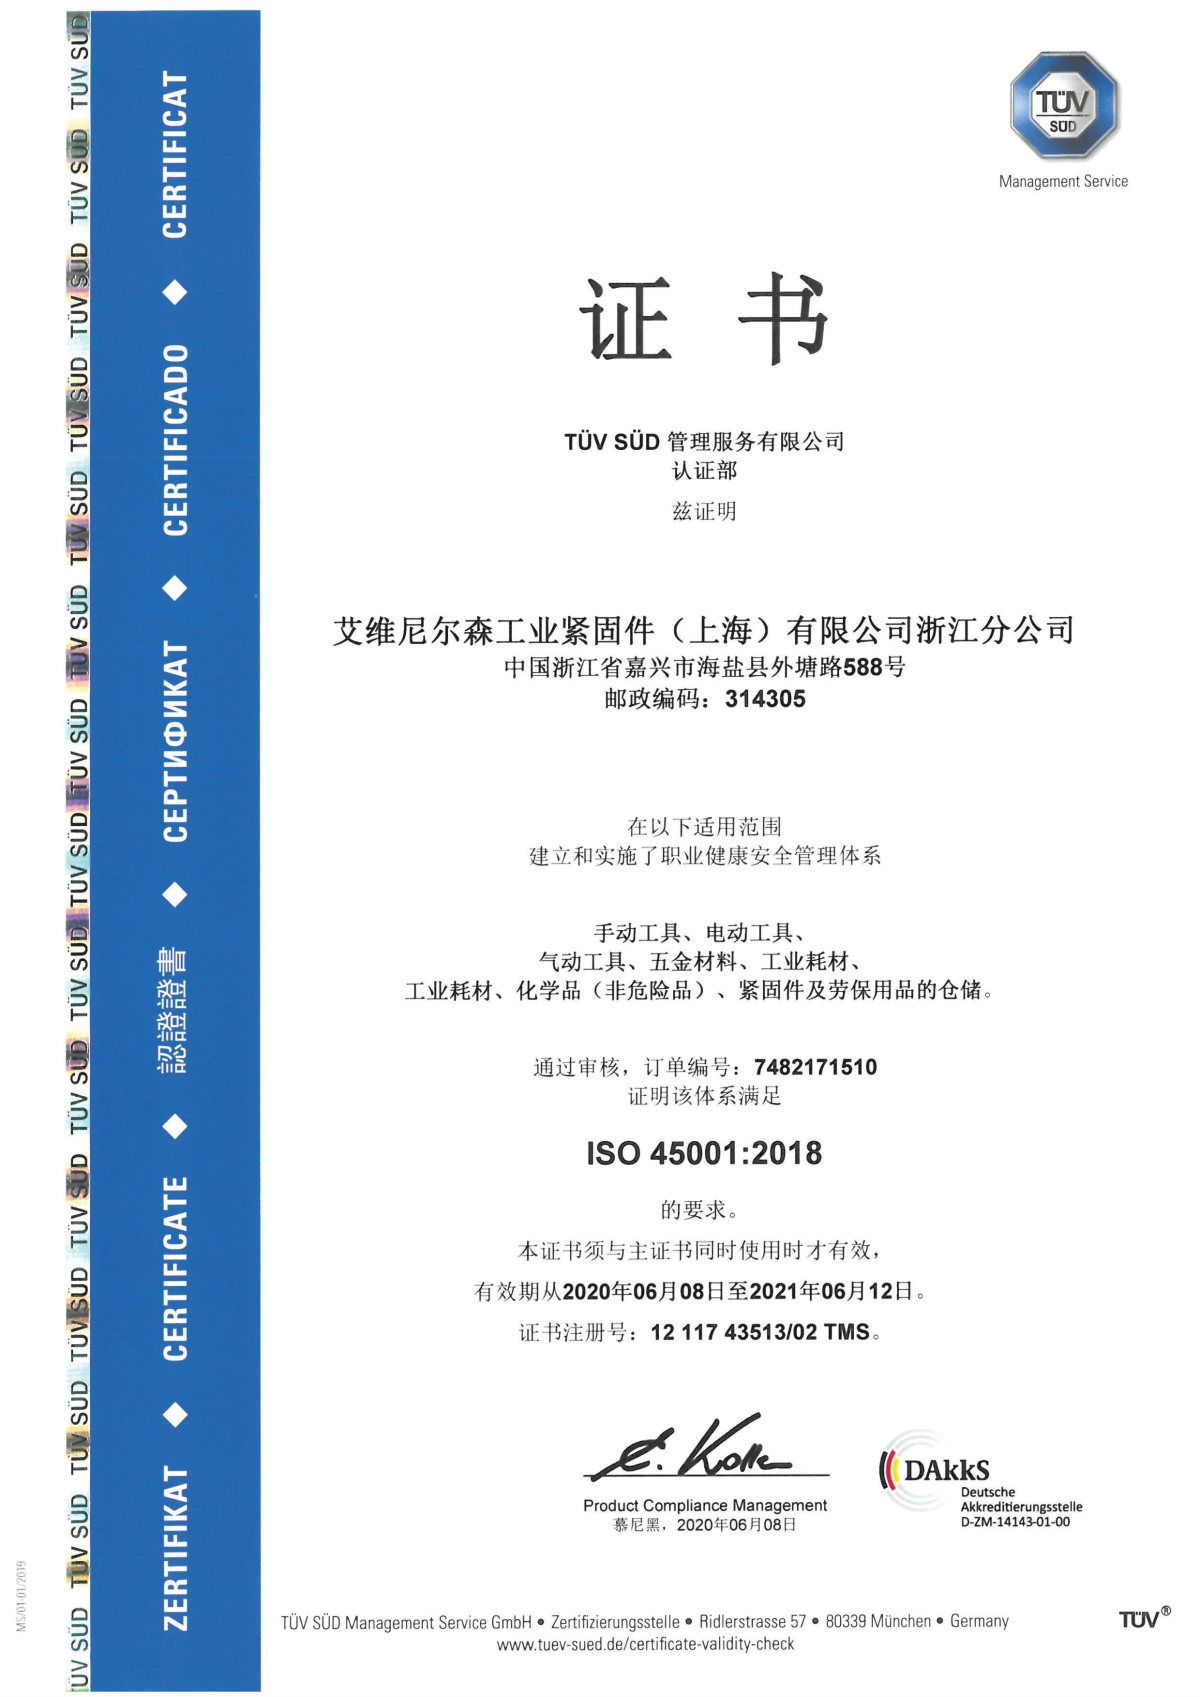 WLC-C-0.30 A0 艾维尼尔森工业紧固件（上海）有限公司浙江分公司—ISO45001 中文版证书